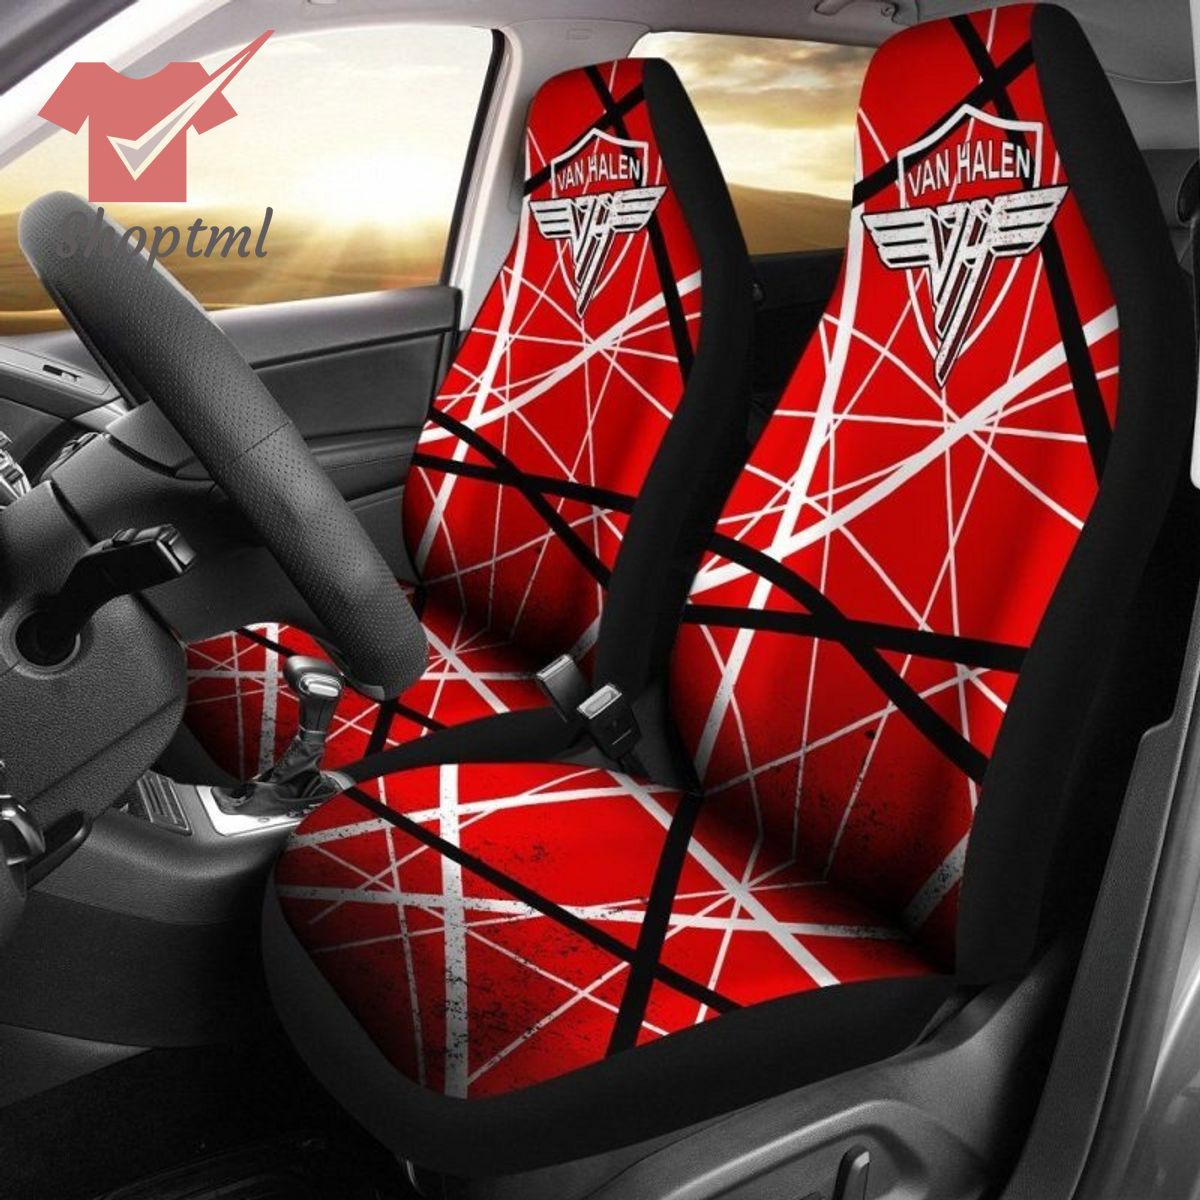 Van Halen Red Car Car Seat Cover